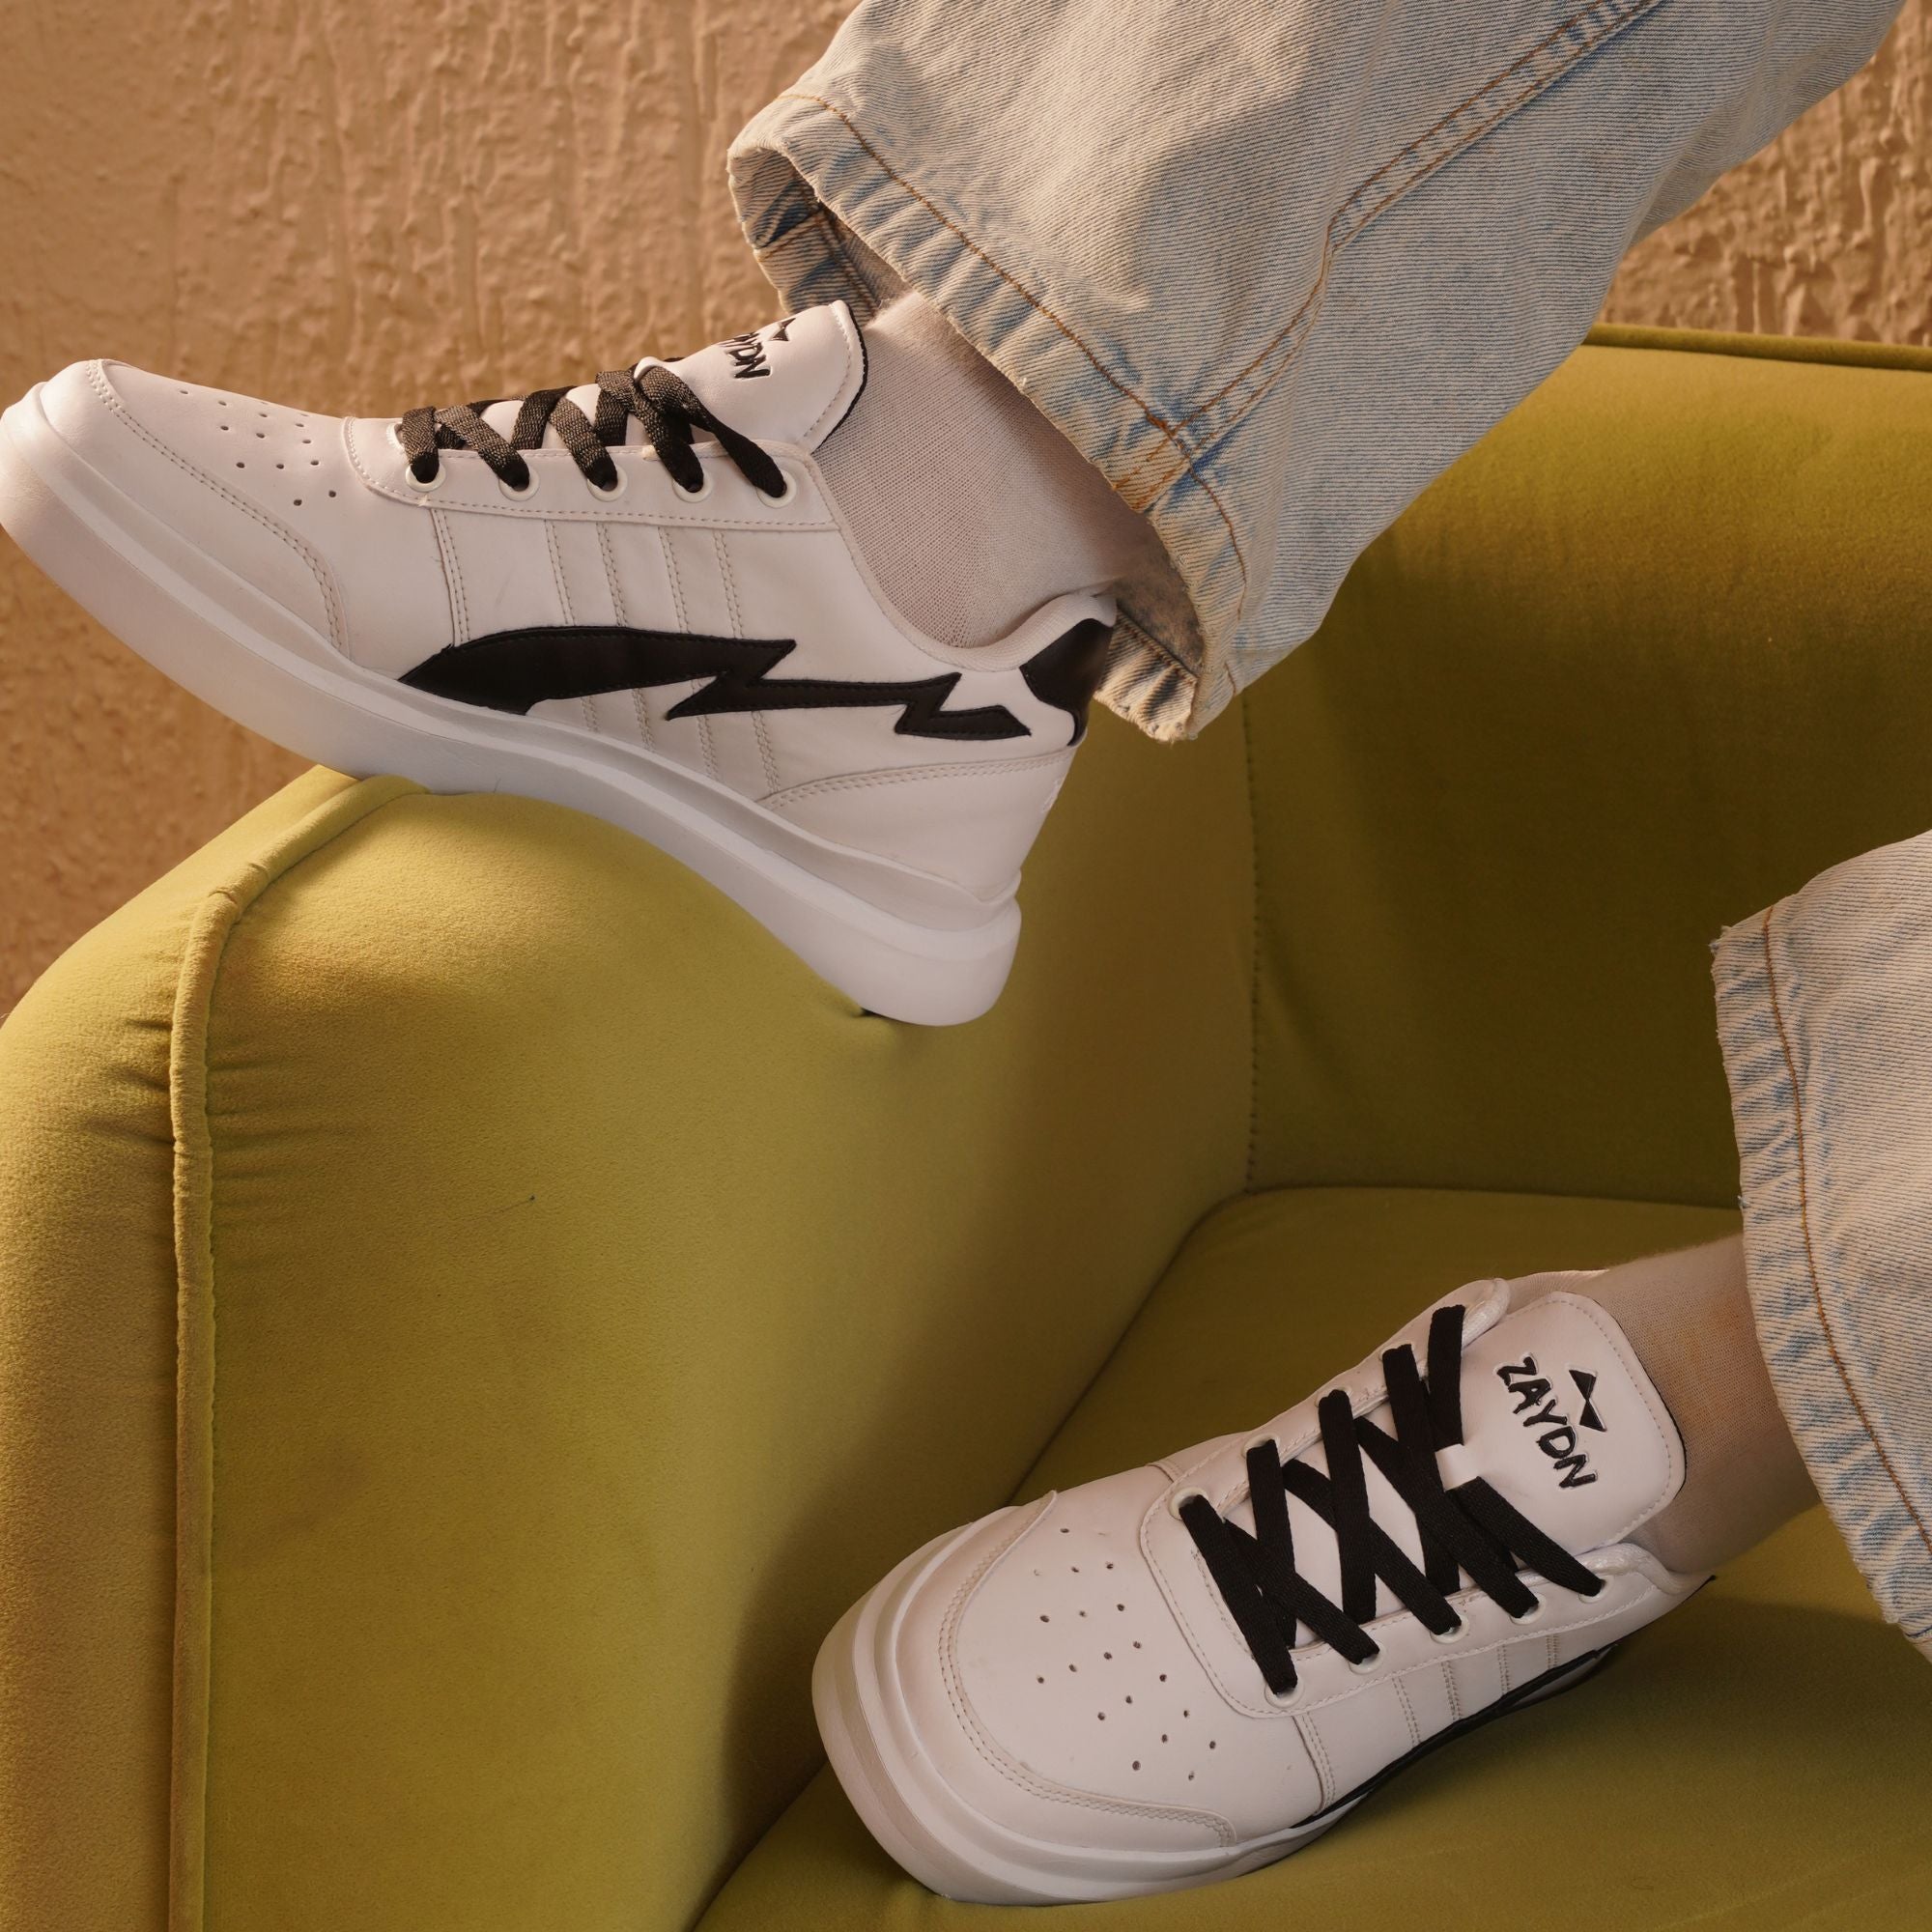 Buy Amazon Brand - Inkast Denim Co. Men Black Canvas Sneakers-10 UK  (AZ-IK-027A) at Amazon.in